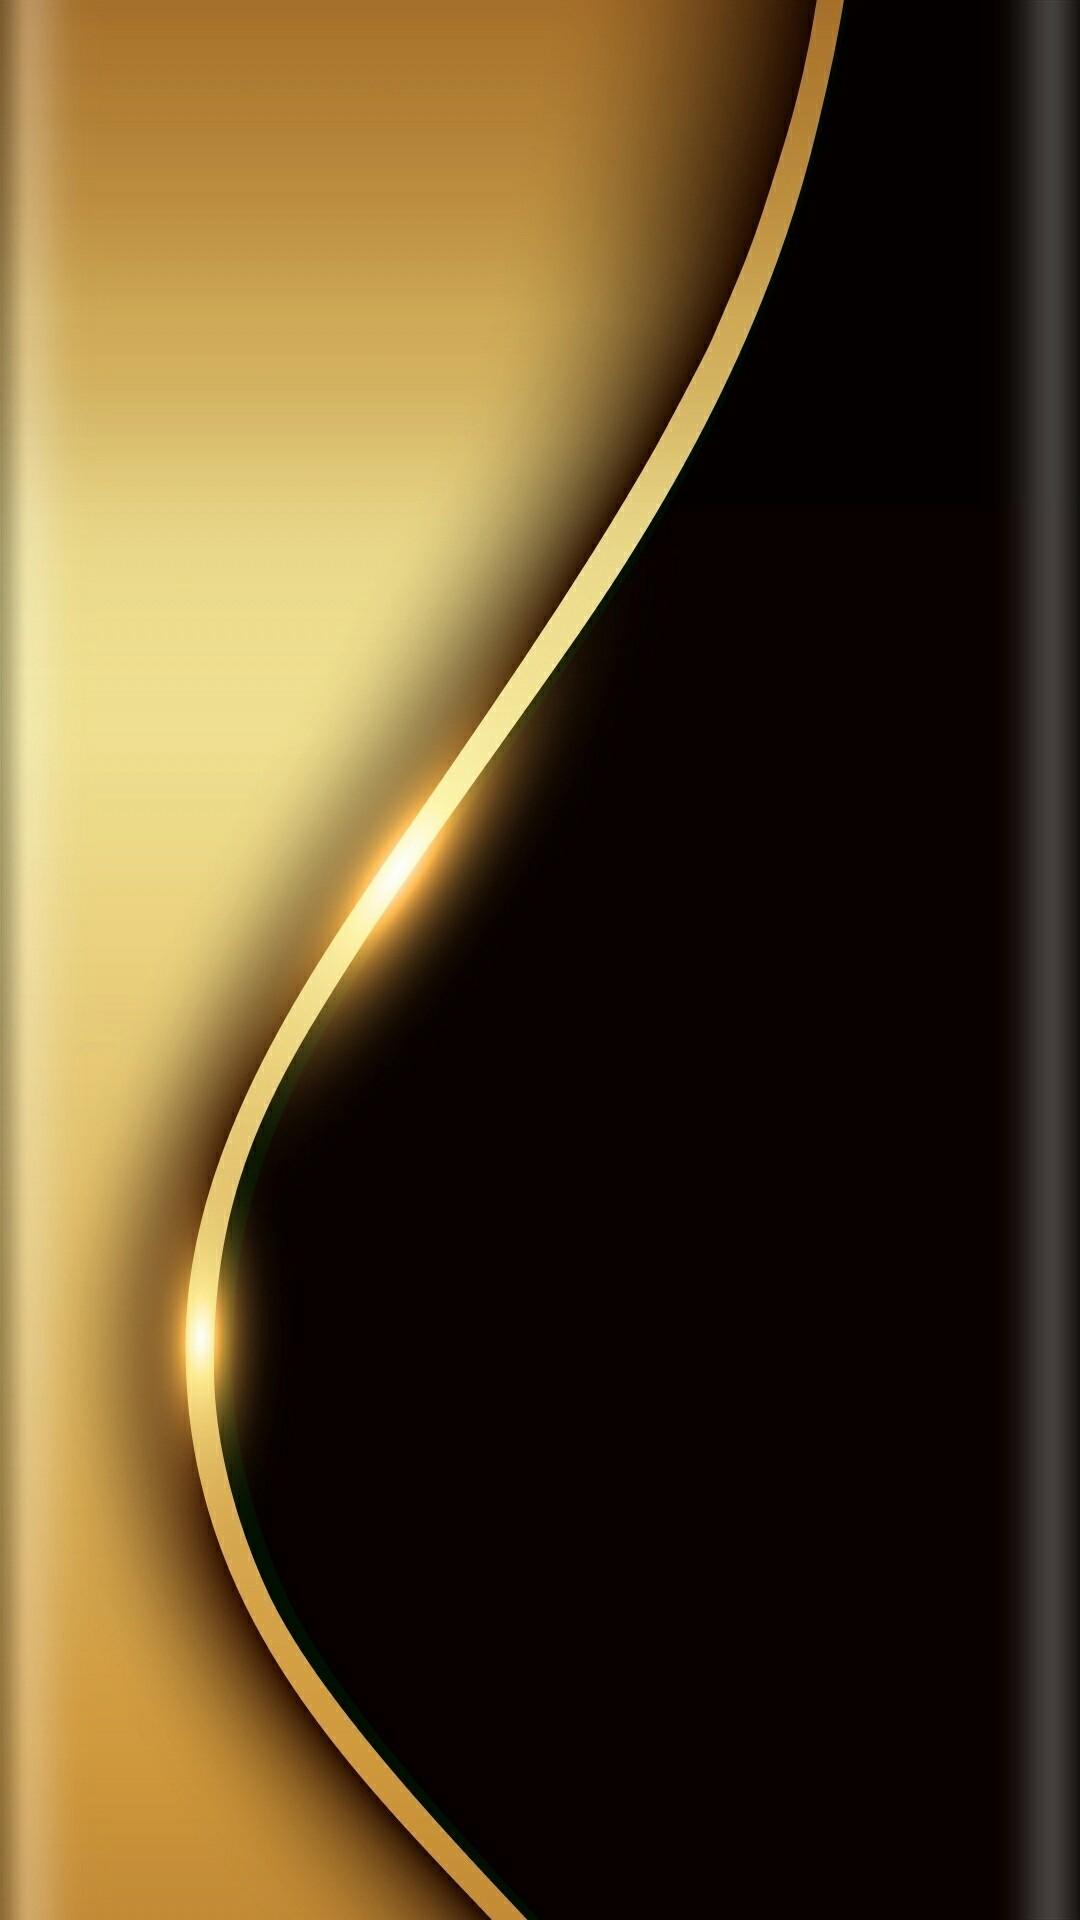 Golden Samsung Mobile Wallpapers - Wallpaper Cave